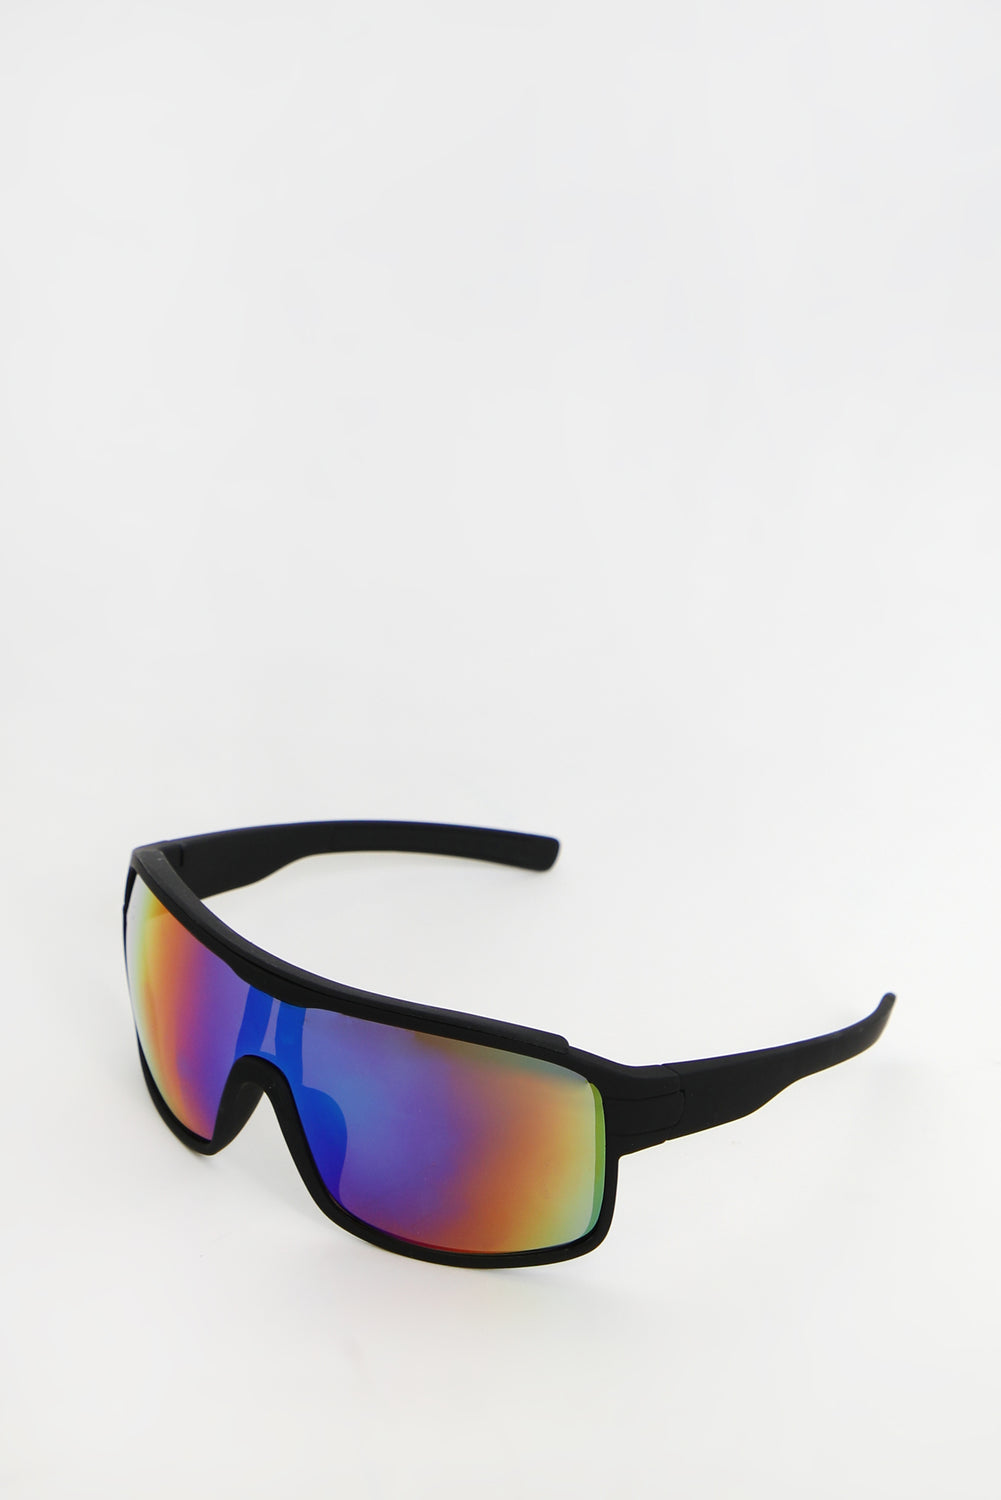 West49 Revo Shield Sunglasses West49 Revo Shield Sunglasses